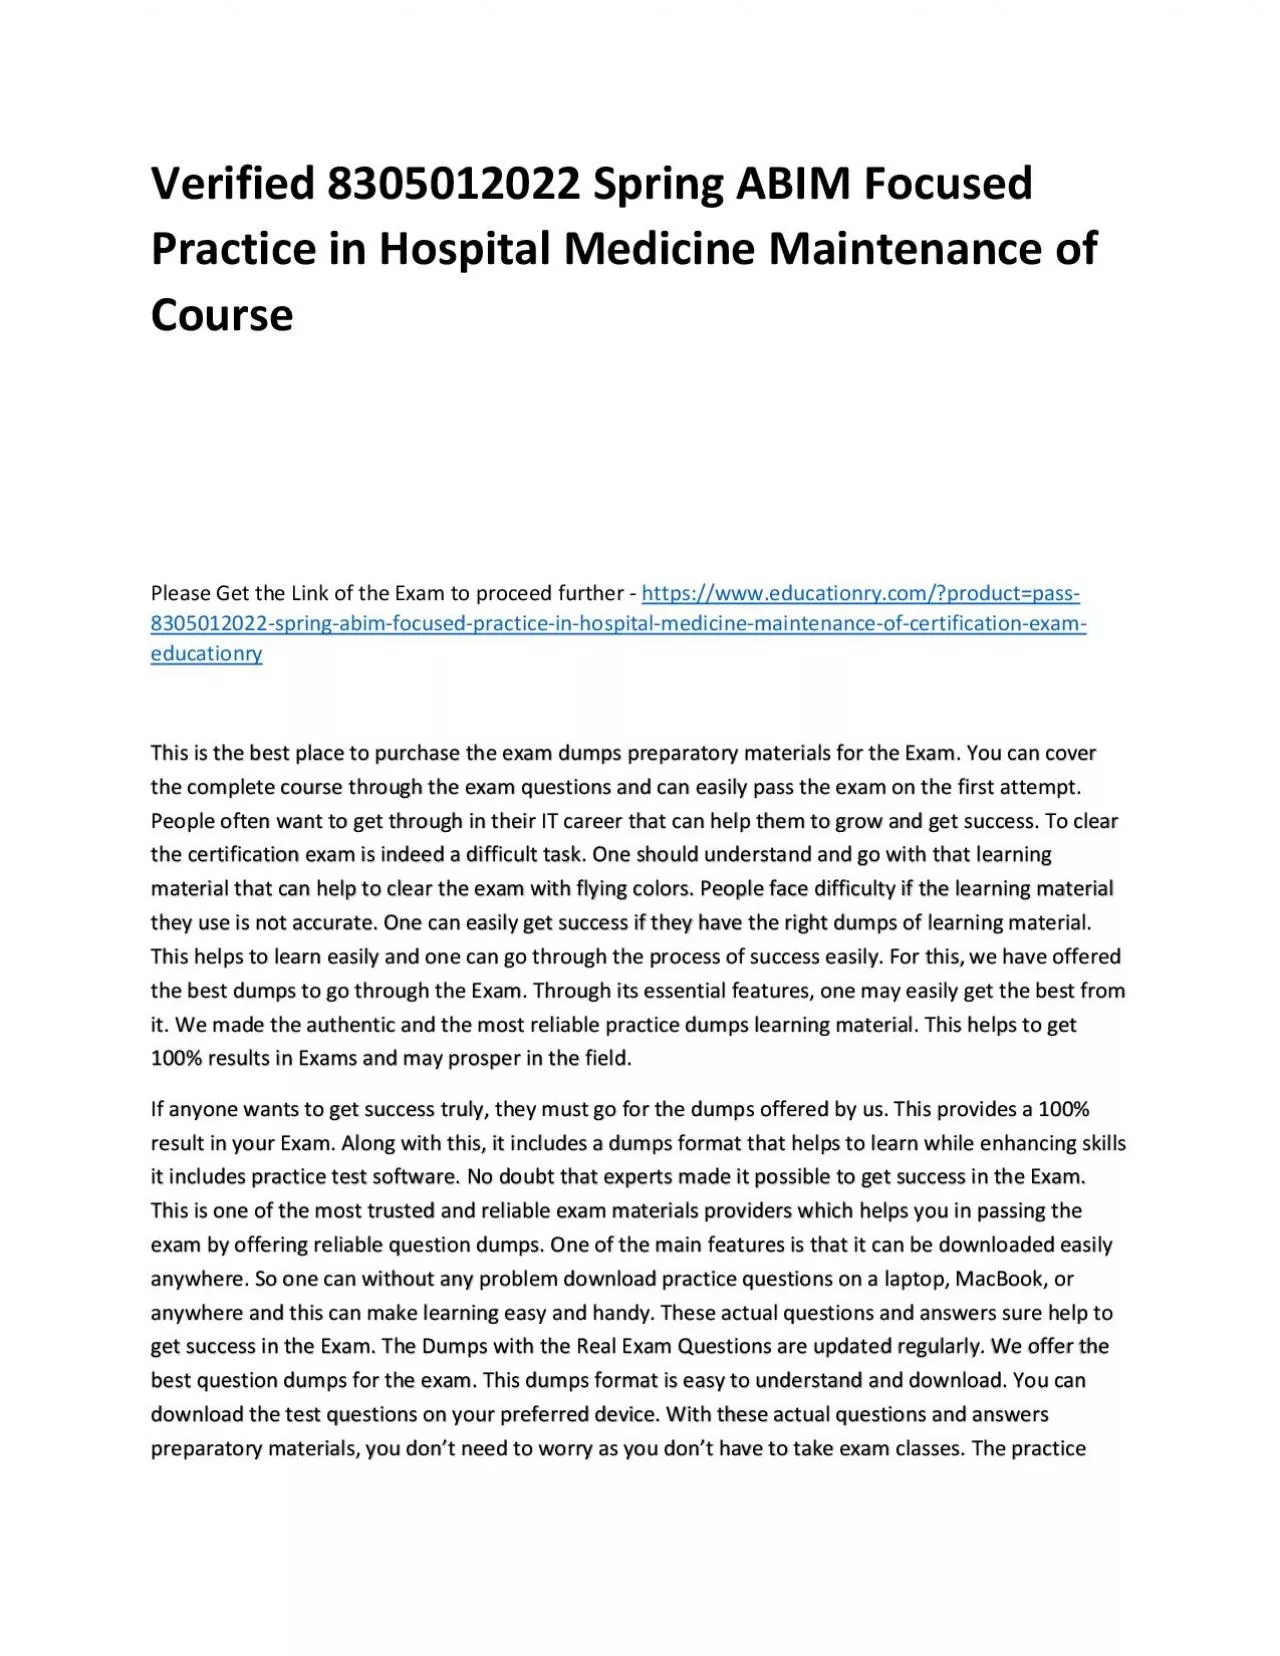 Verified 8305012022 Spring ABIM Focused Practice in Hospital Medicine Maintenance of Practice